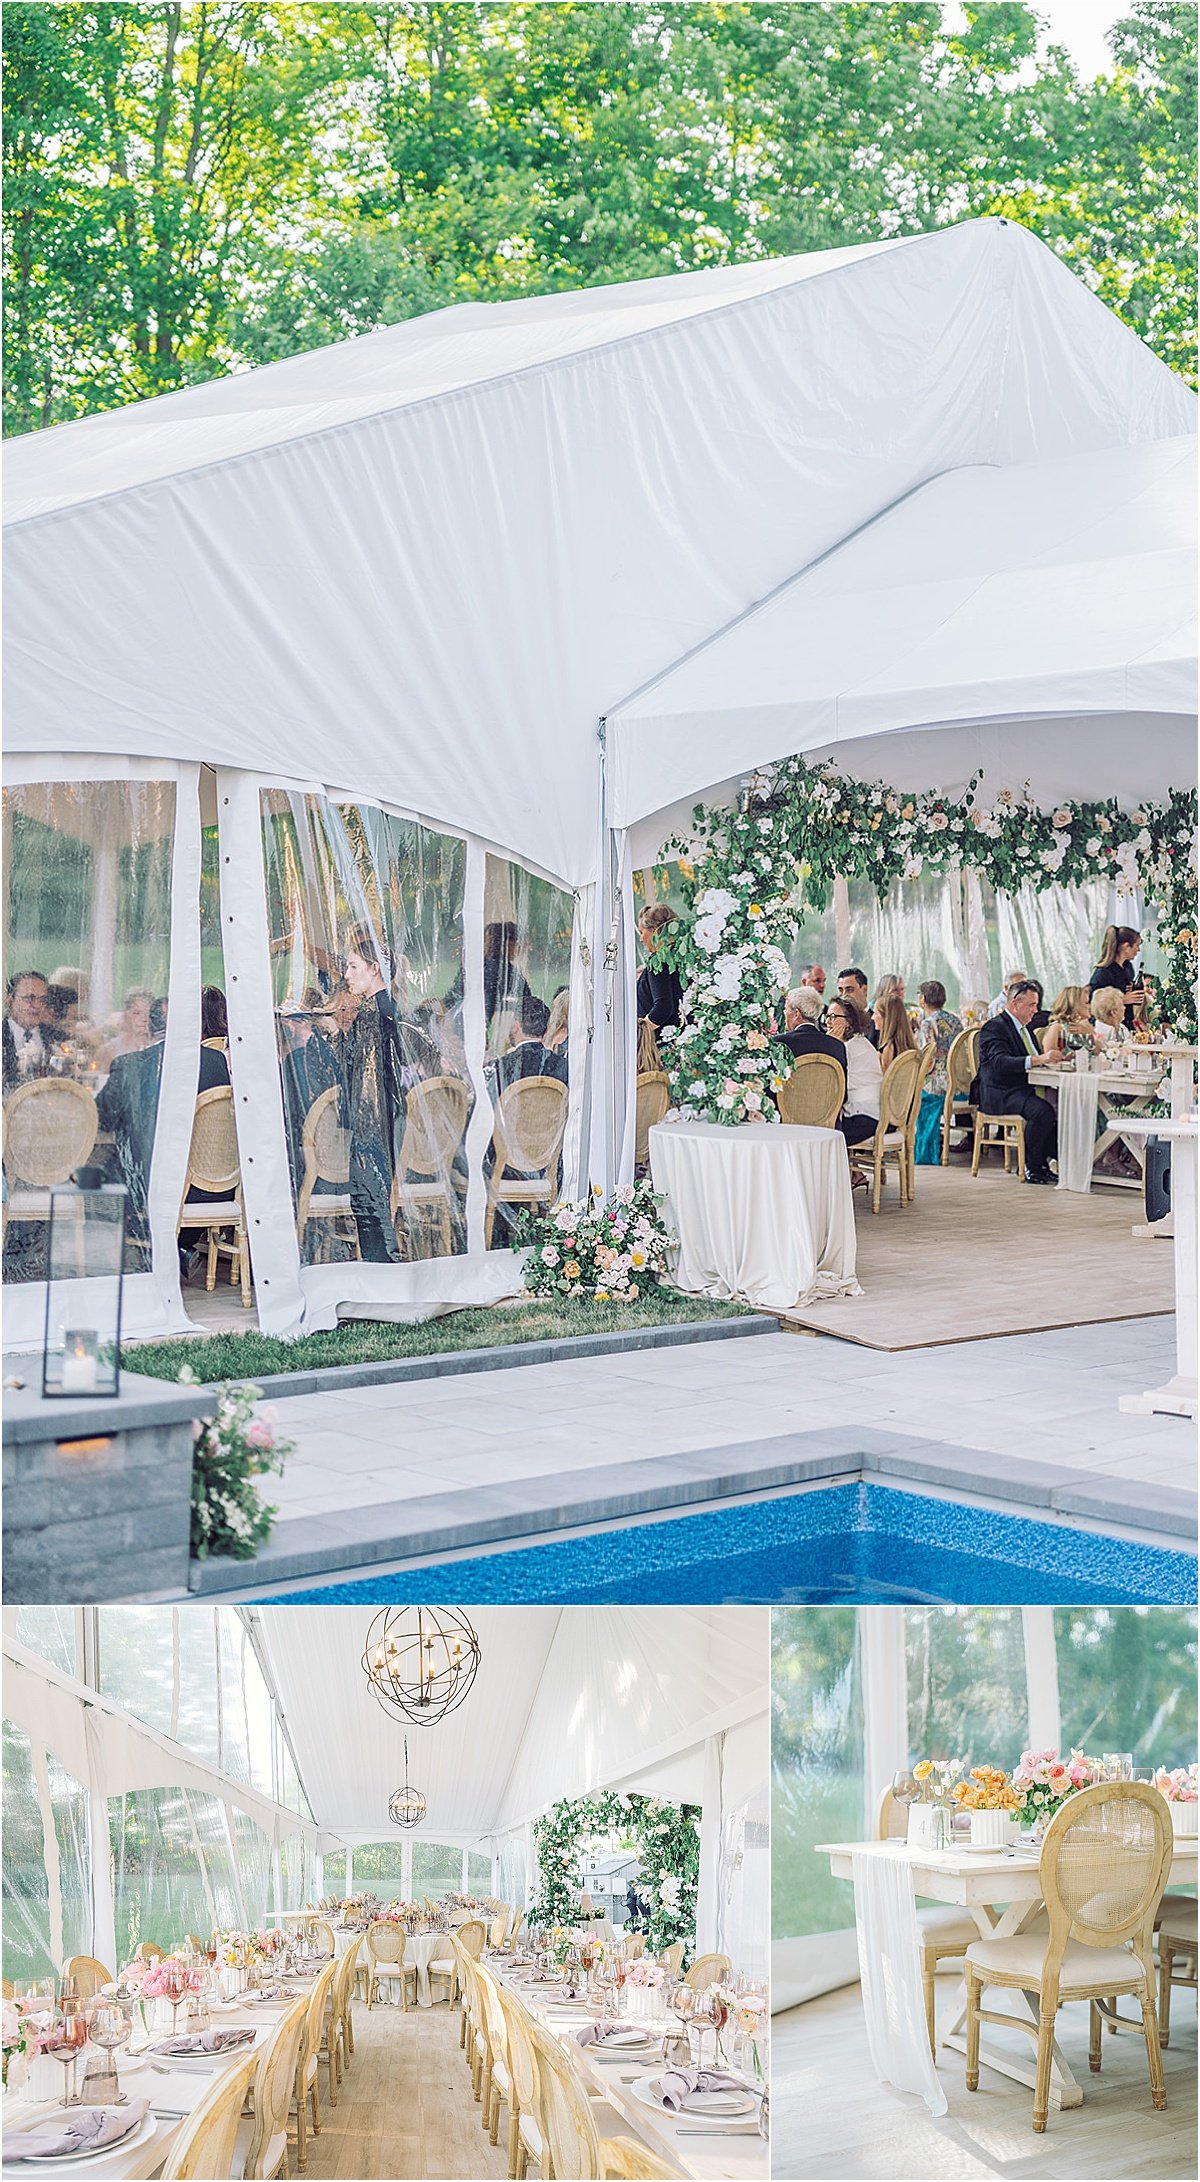 Tent-Wedding-Planner-Toronto-Laura-Olsen-Events-ClelandPhotographs21.jpg